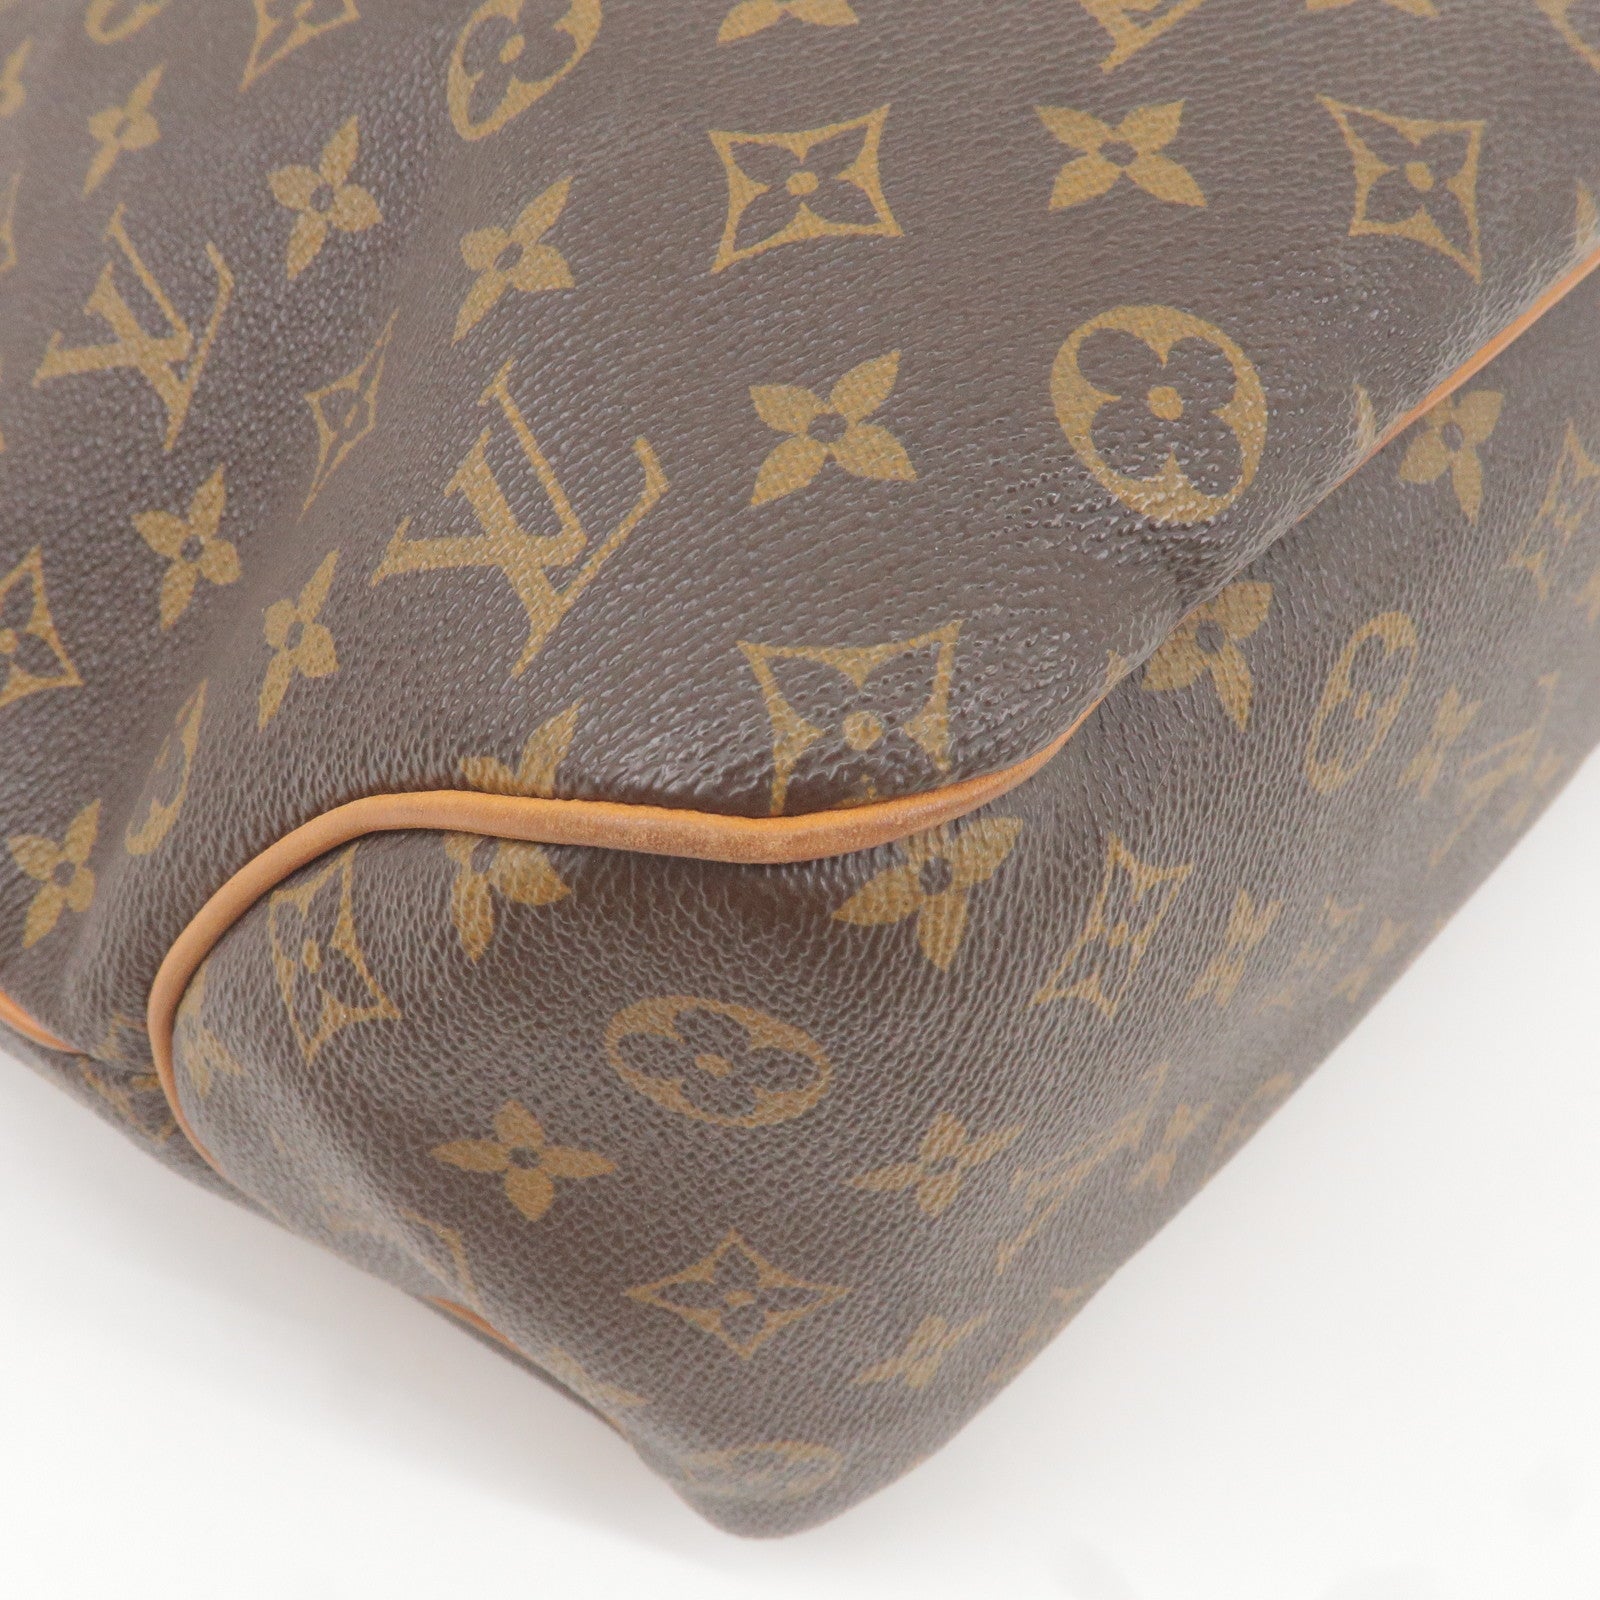 Louis Vuitton Monogram Delightful PM Shoulder Bag - A World Of